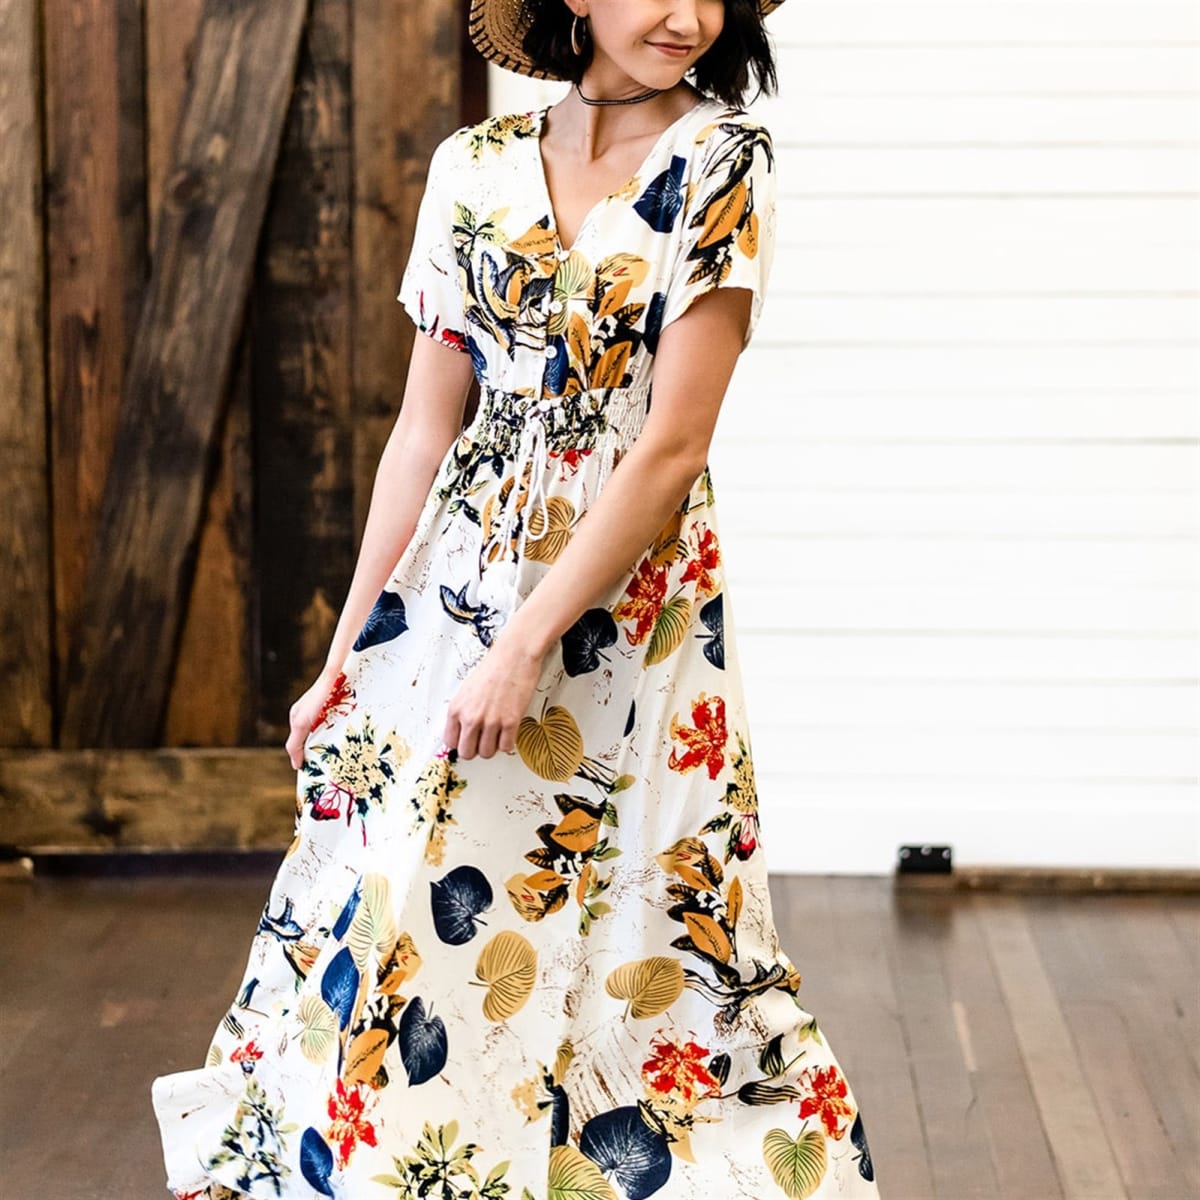 Iris Floral Dress – Only $29.99!